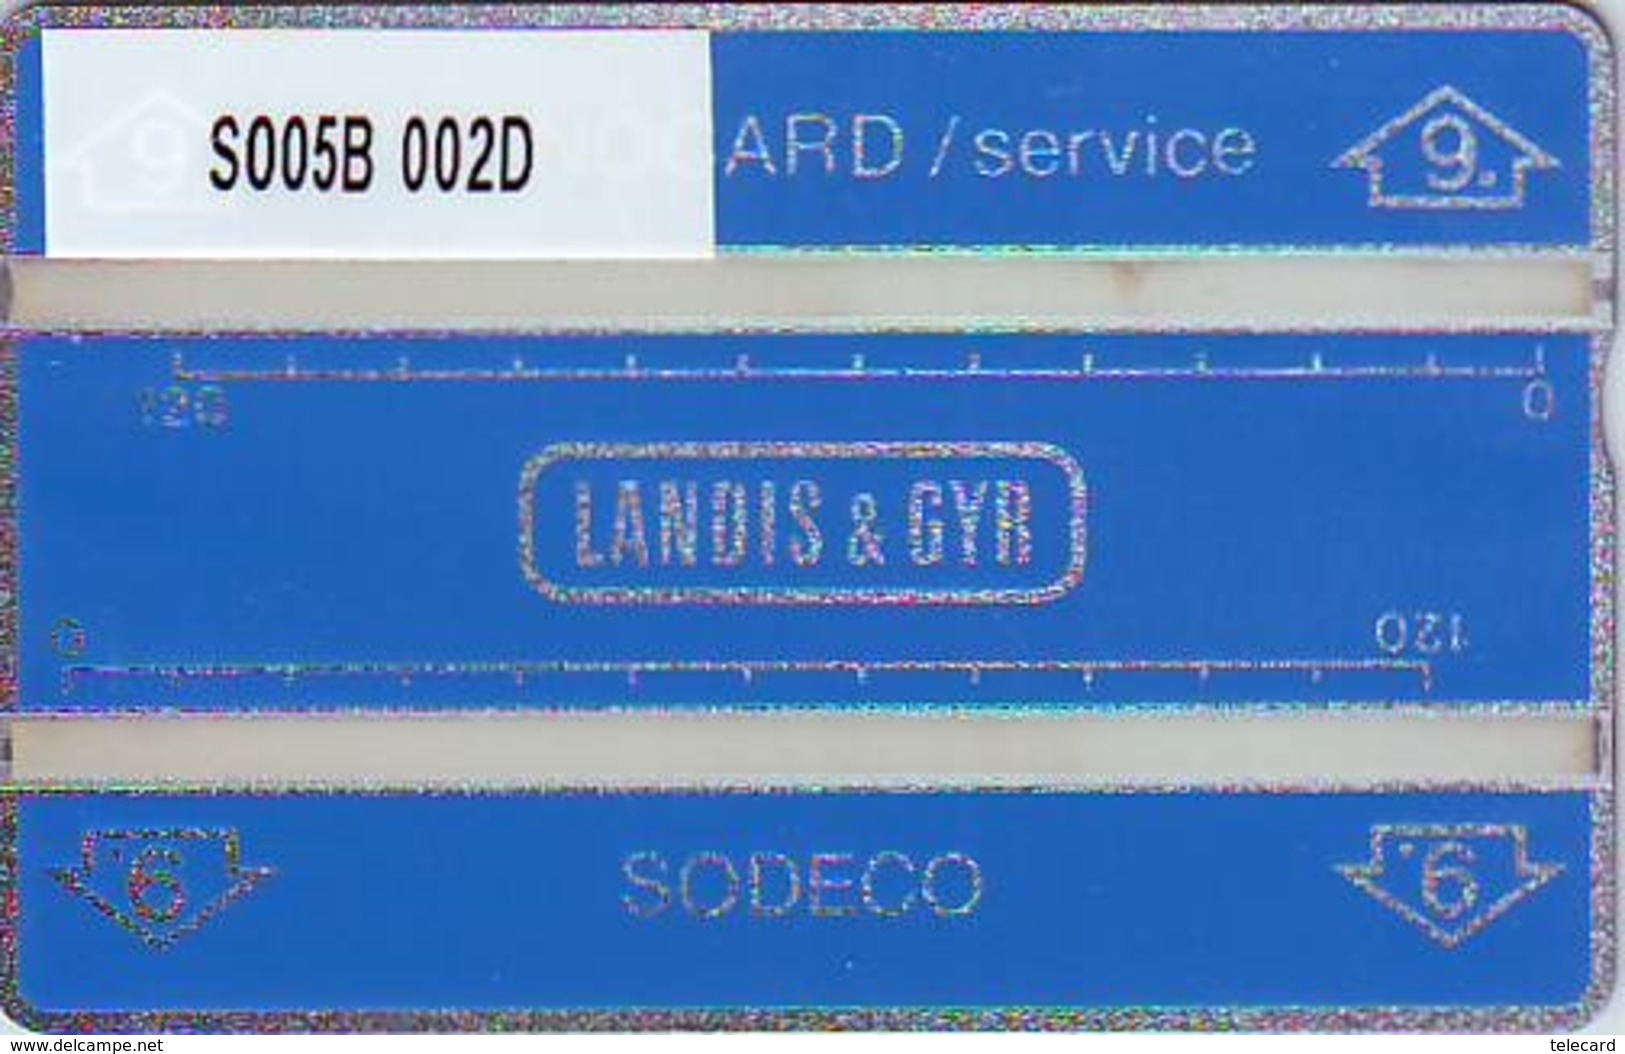 NEDERLAND LANDIS&GYR * SODECO * SERVICE CARD NR S005B 002D  "9"  3 Mm ONGEBRUIKT *  MINT - Test & Service